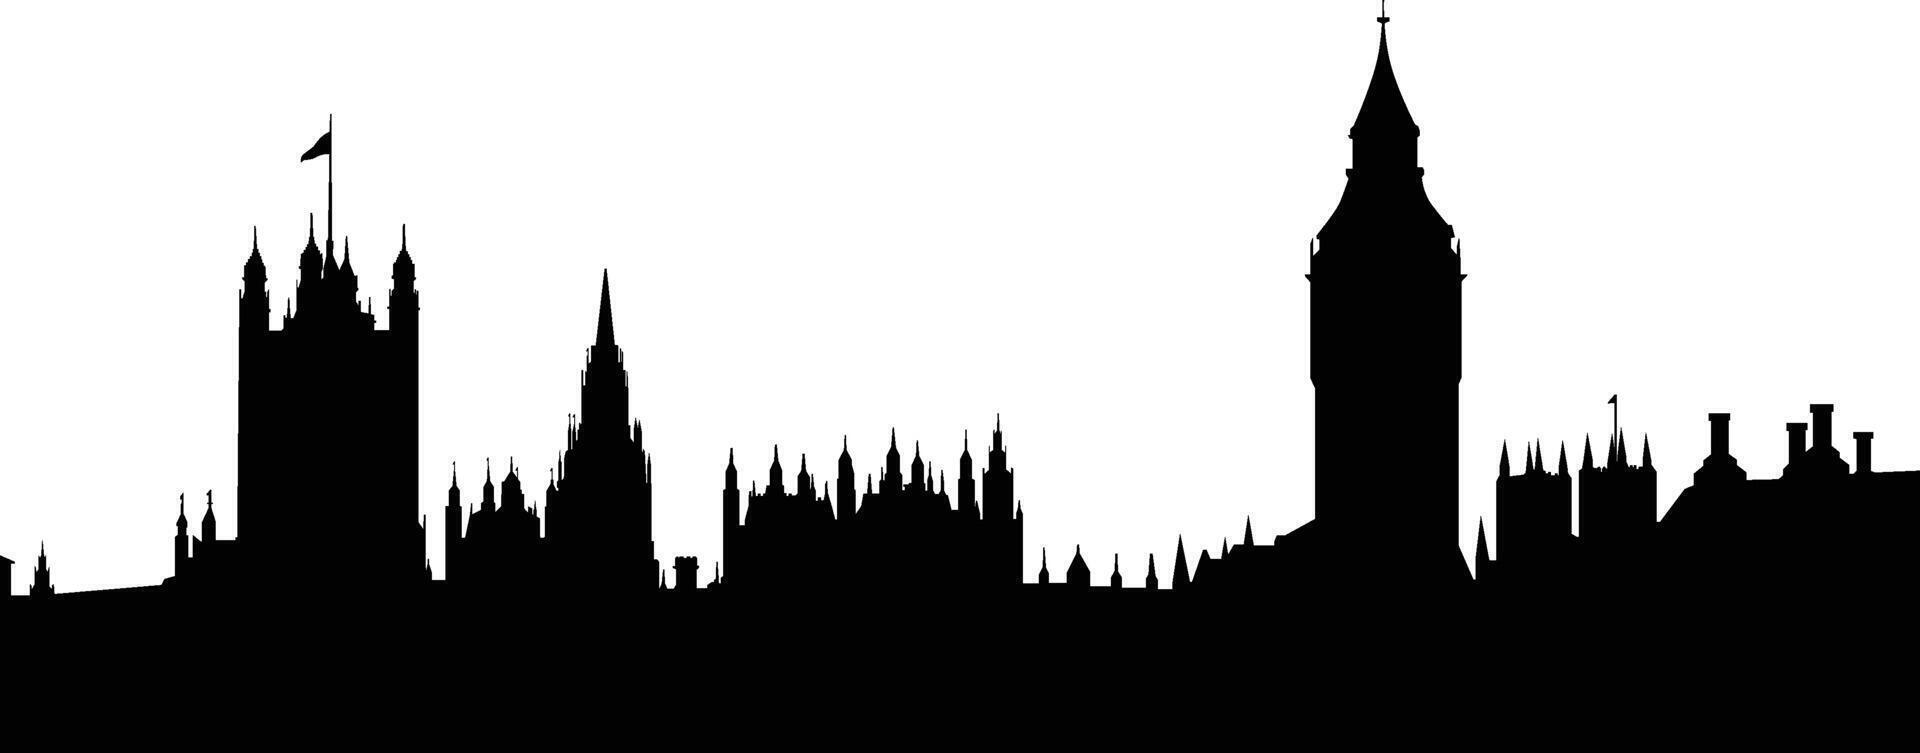 London city skyline silhouette vector illustration